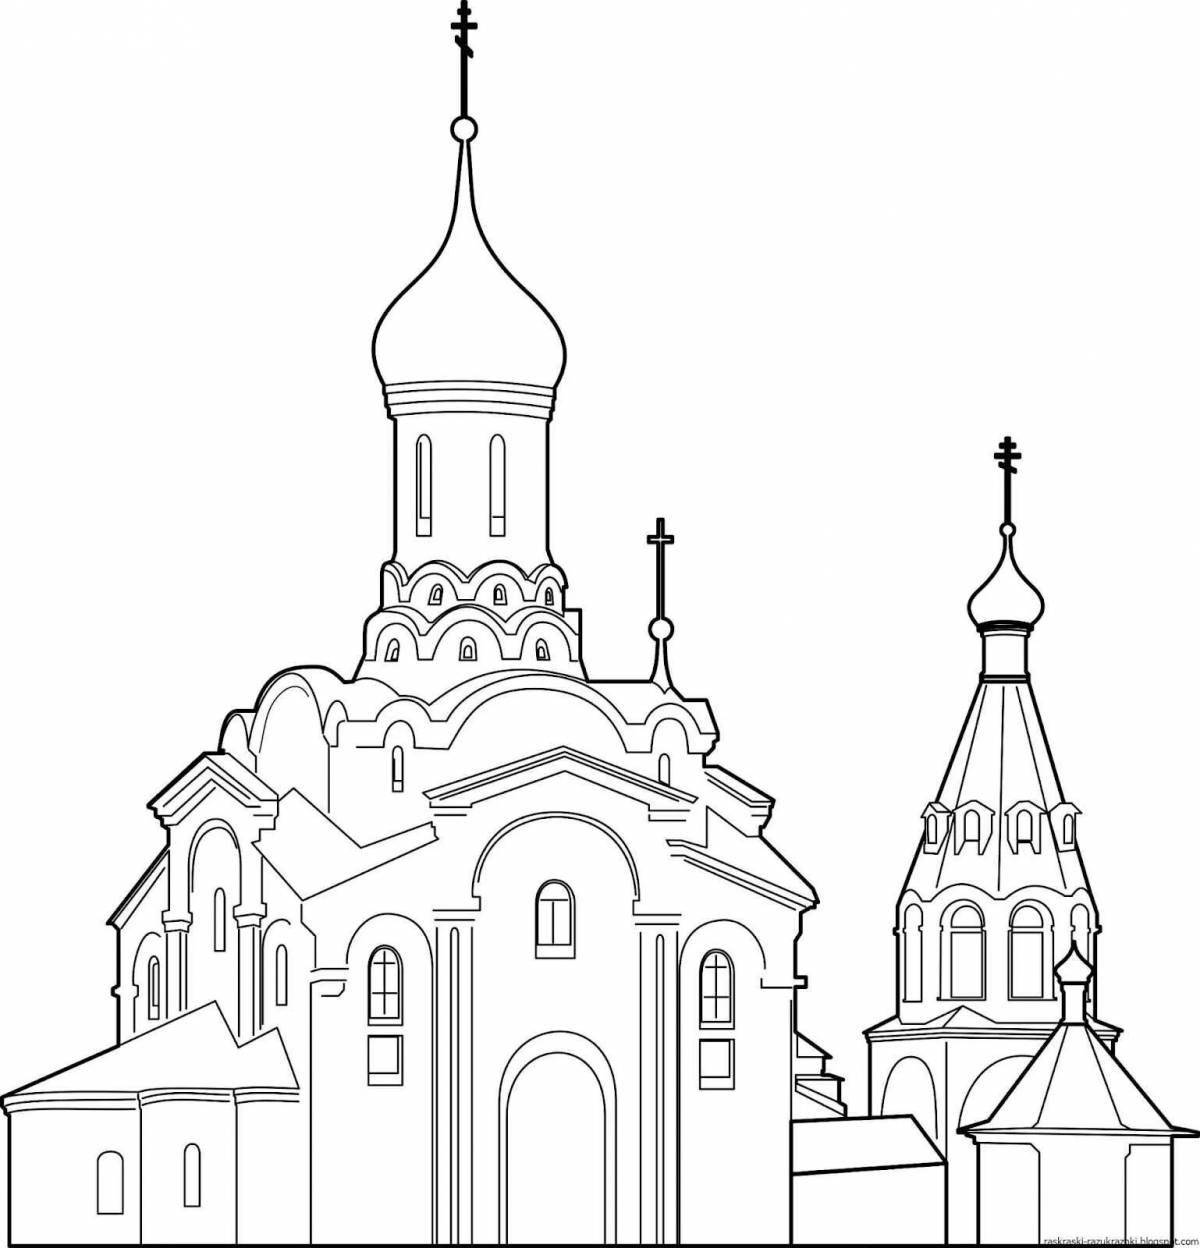 Royal monastery coloring page